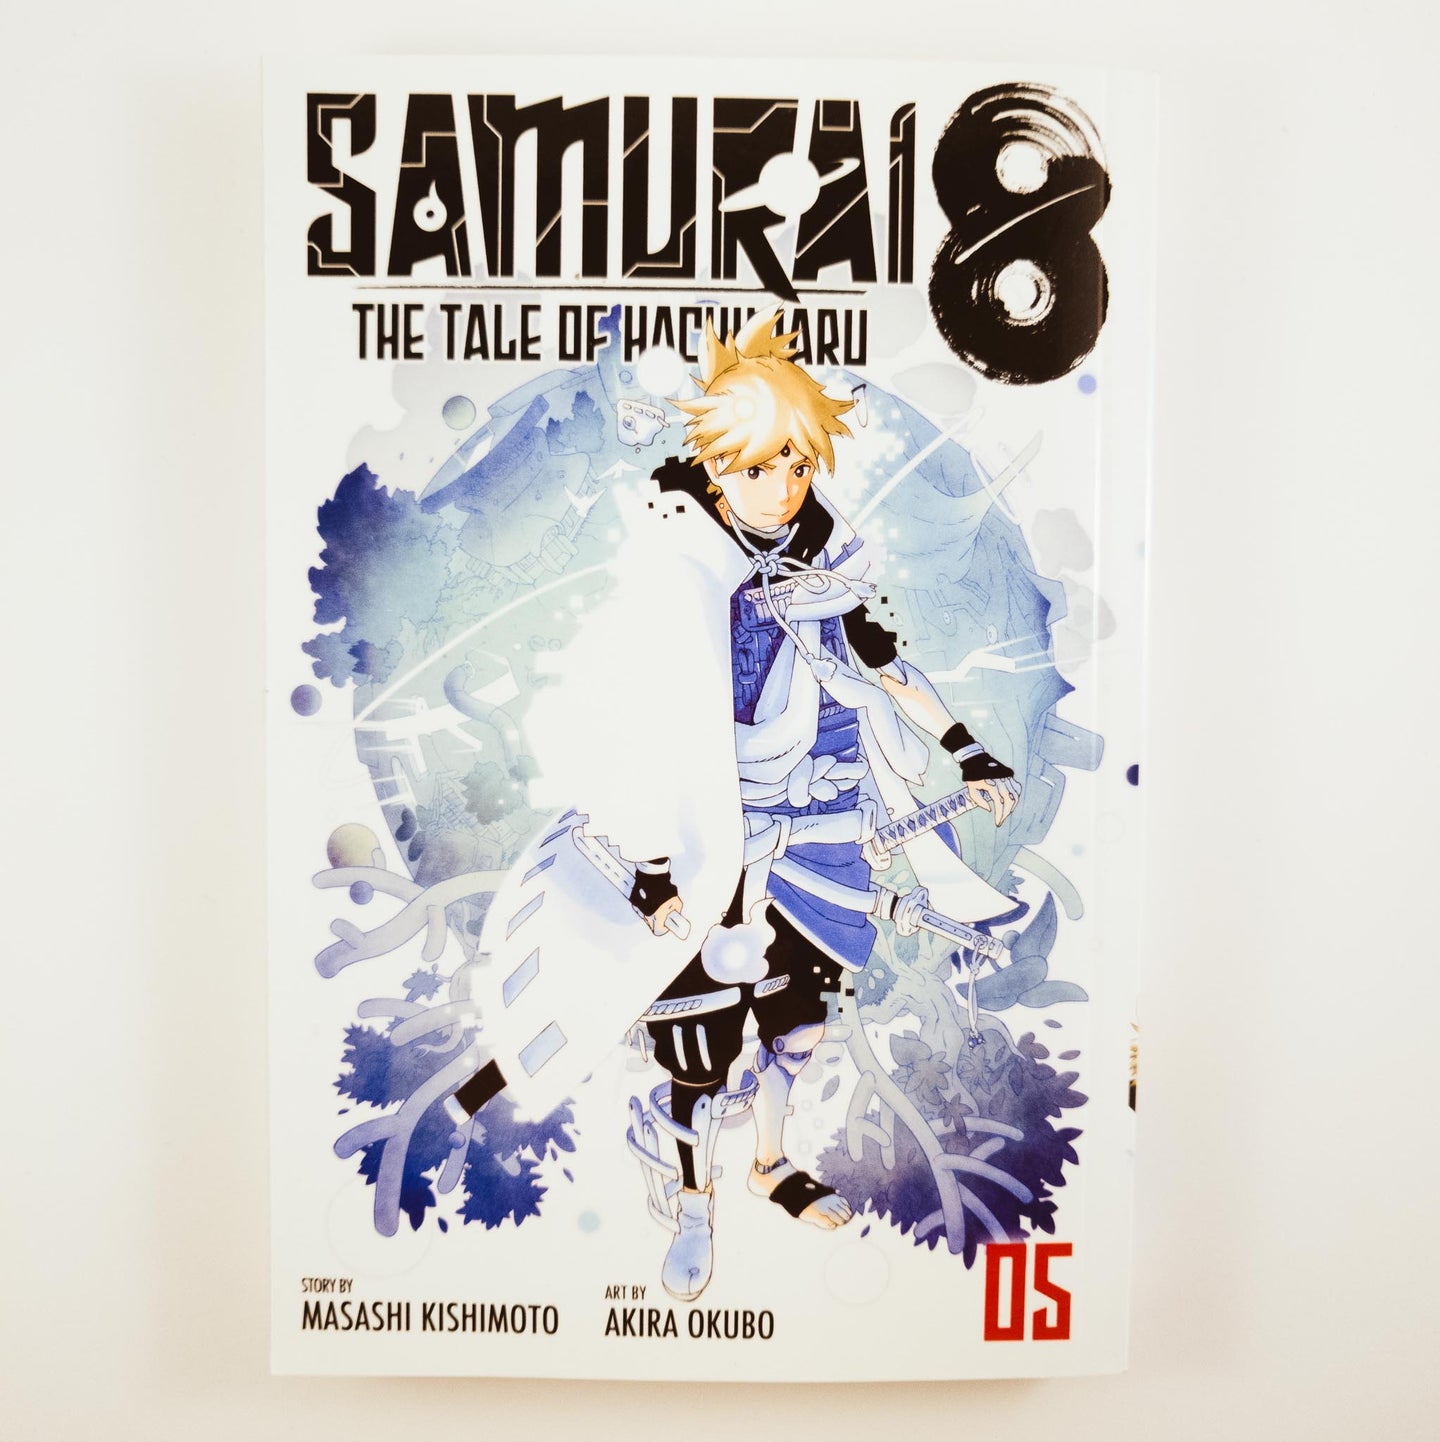 Samurai 8 The Tale of Hachimaru Volume 5. Manga by Masashi Kishimoto and Akira Okubo.